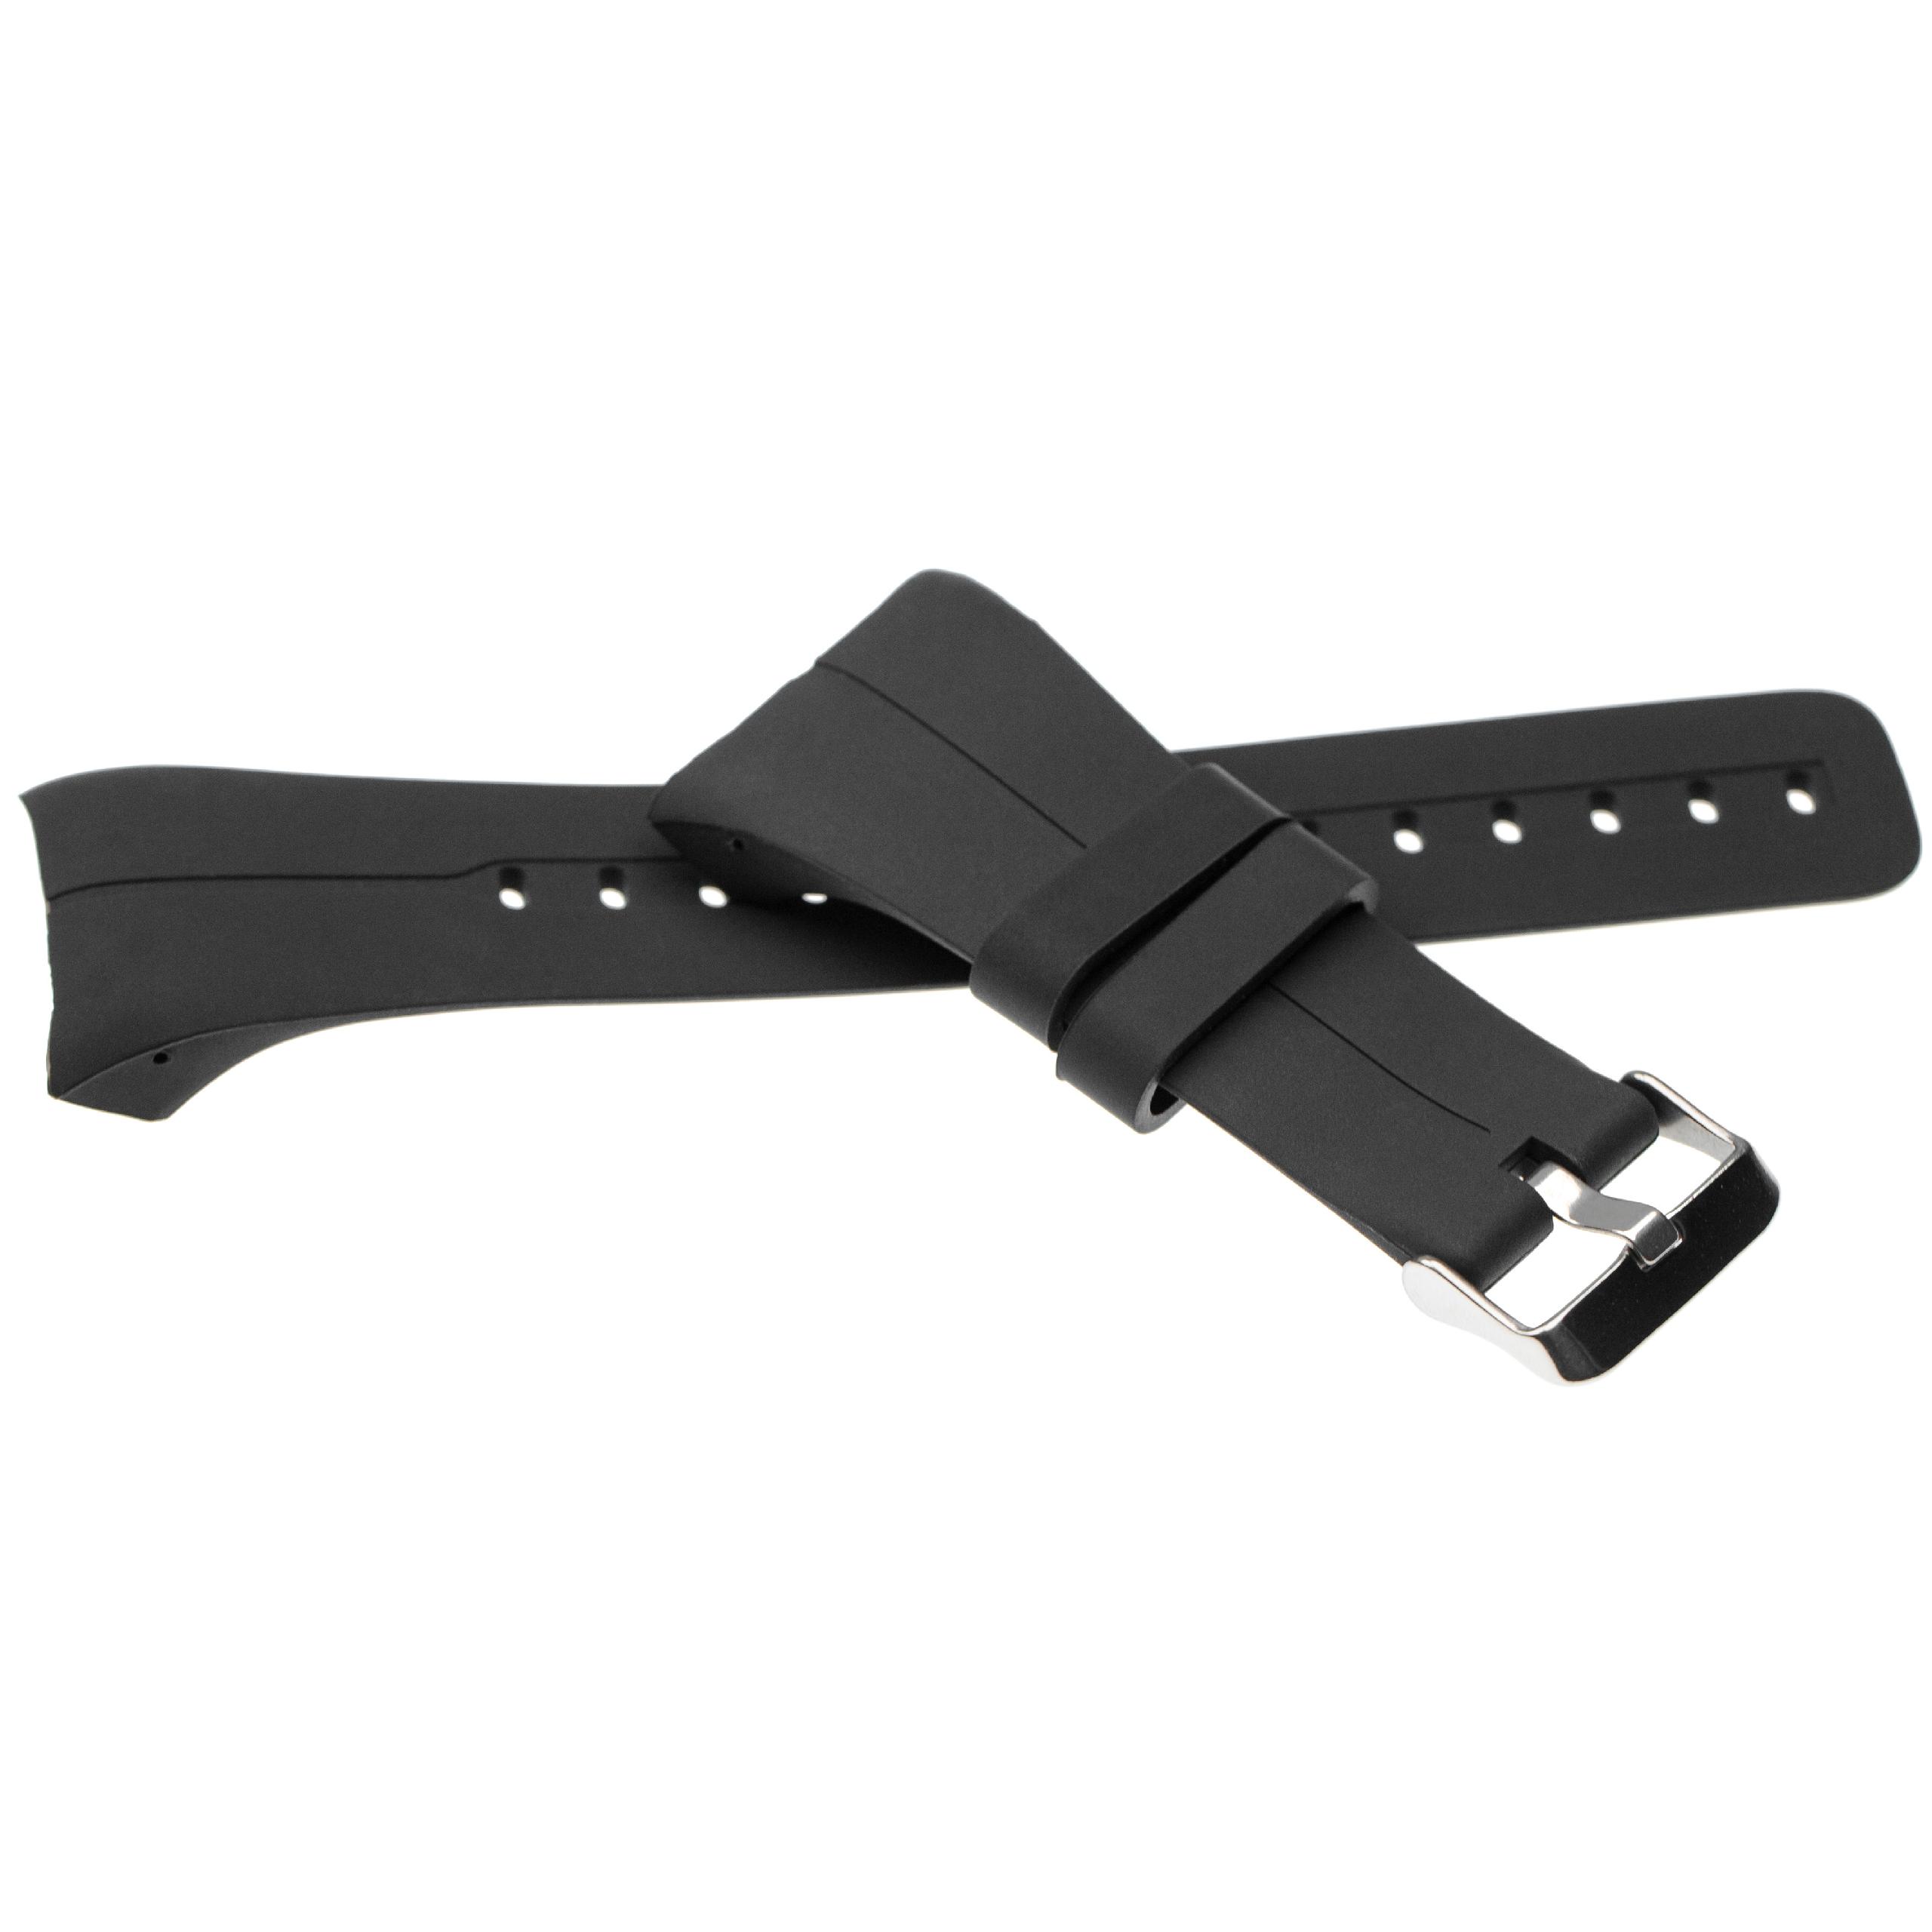 wristband for Polar Smartwatch - 14.5 + 8.9 cm long, silicone, black